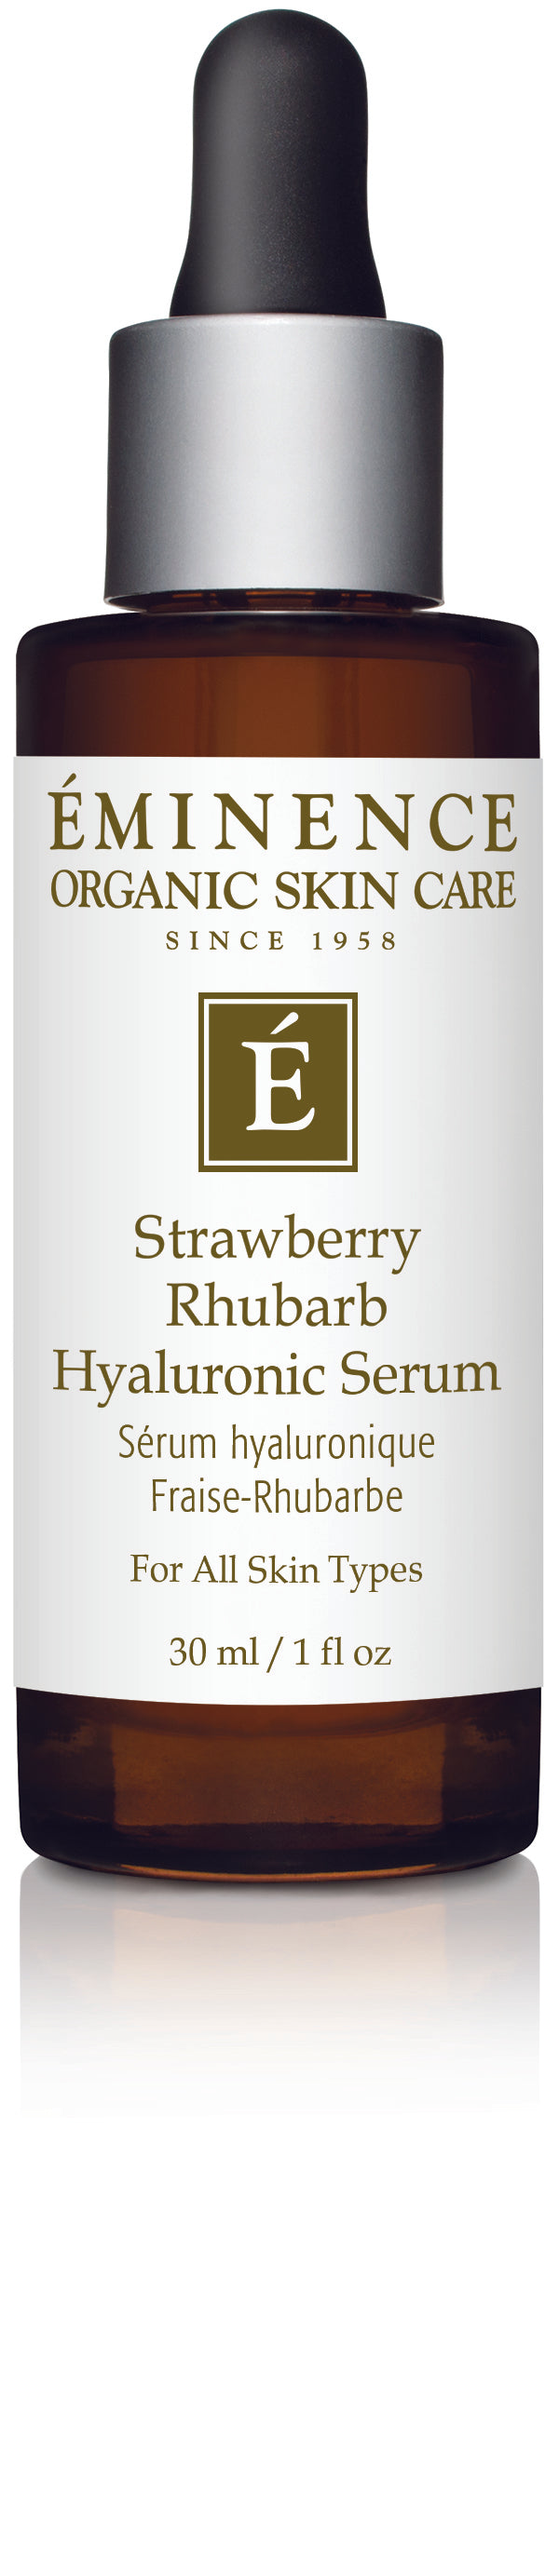 Strawberry Rhubarb Hyaluronic Serum